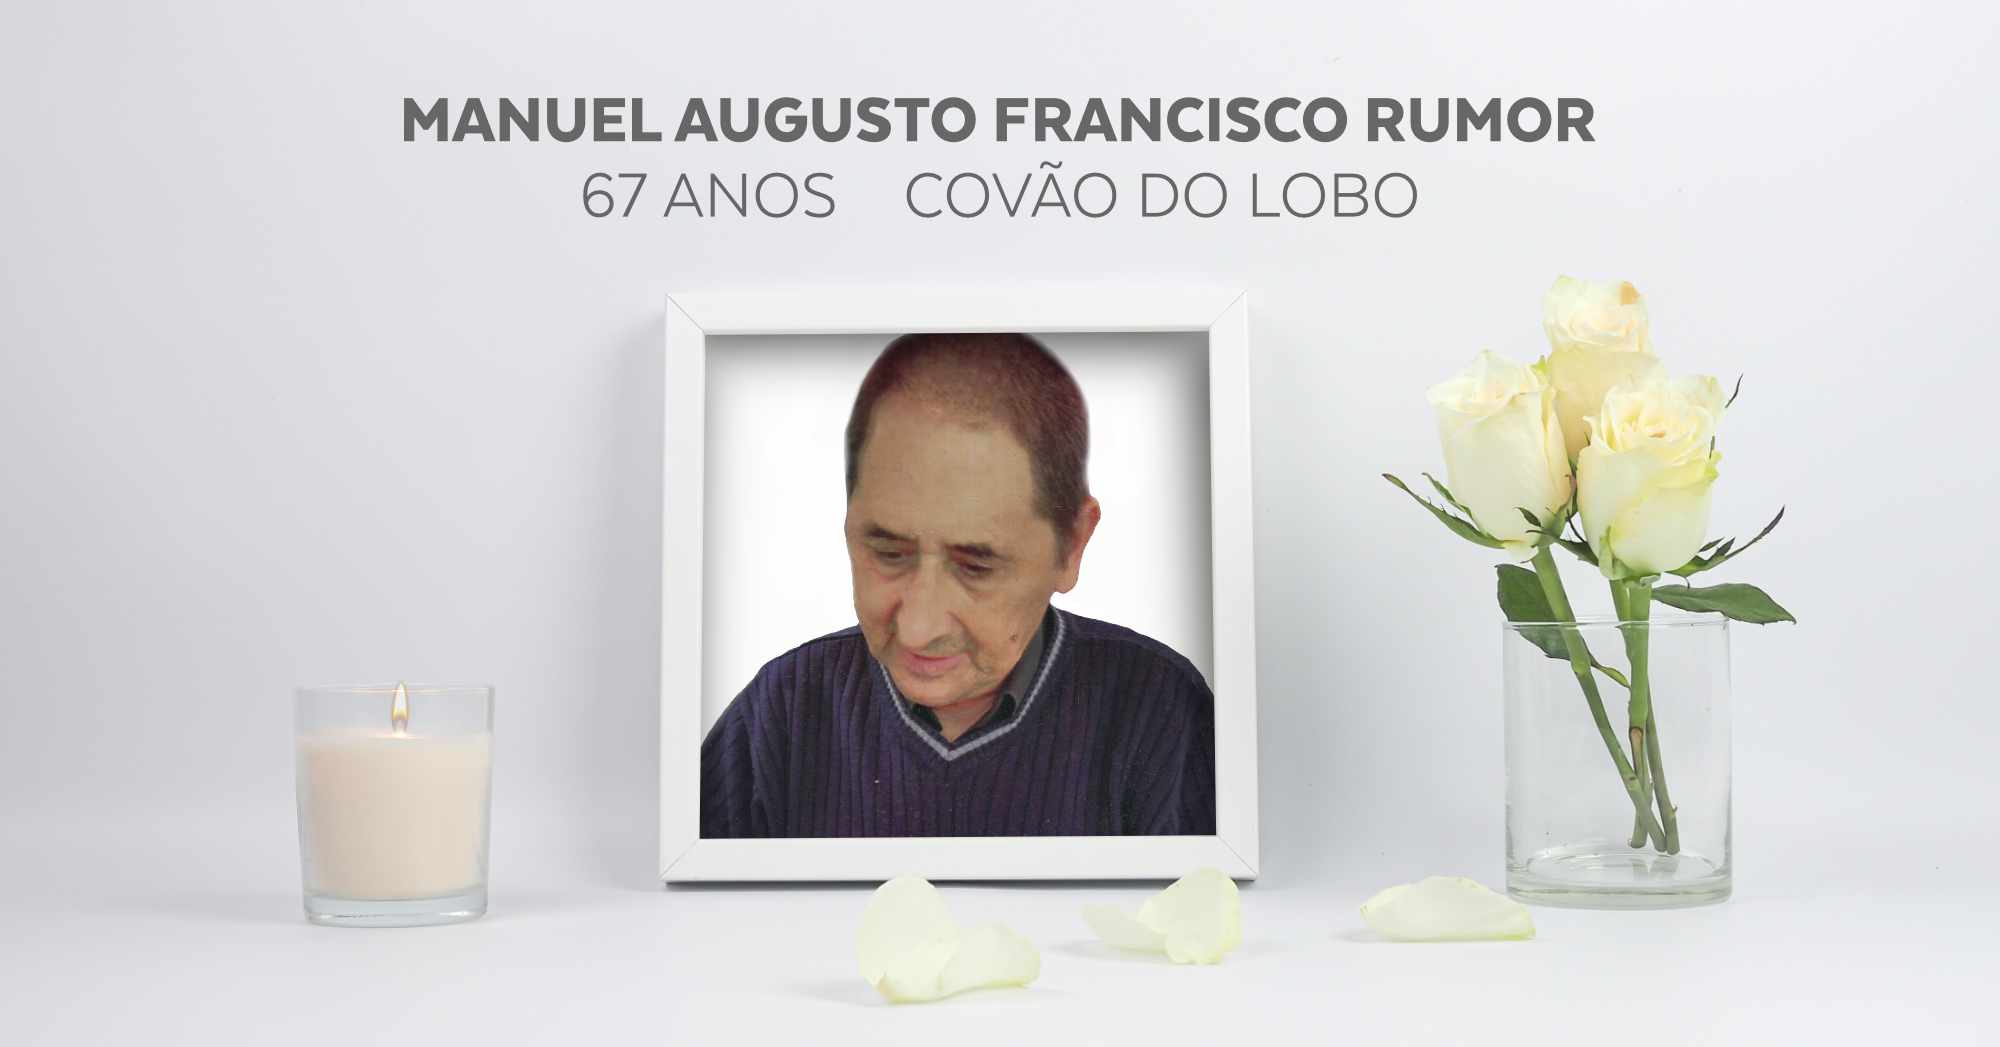 Manuel Augusto Francisco Rumor